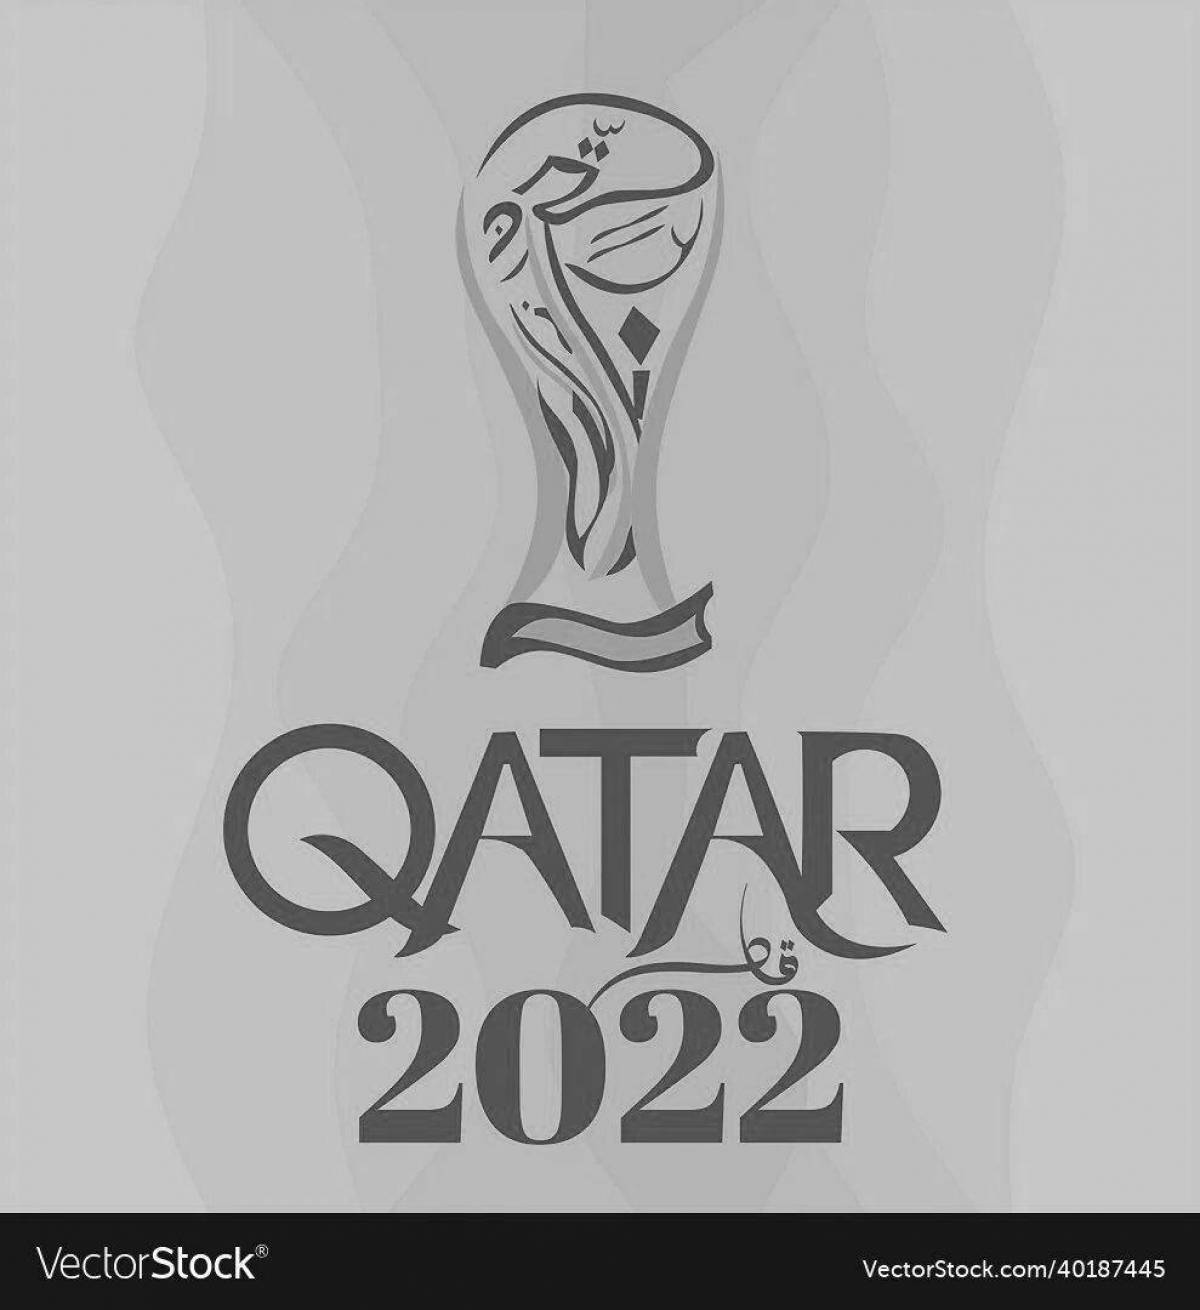 Великолепная раскраска чемпионата мира по футболу 2022 года